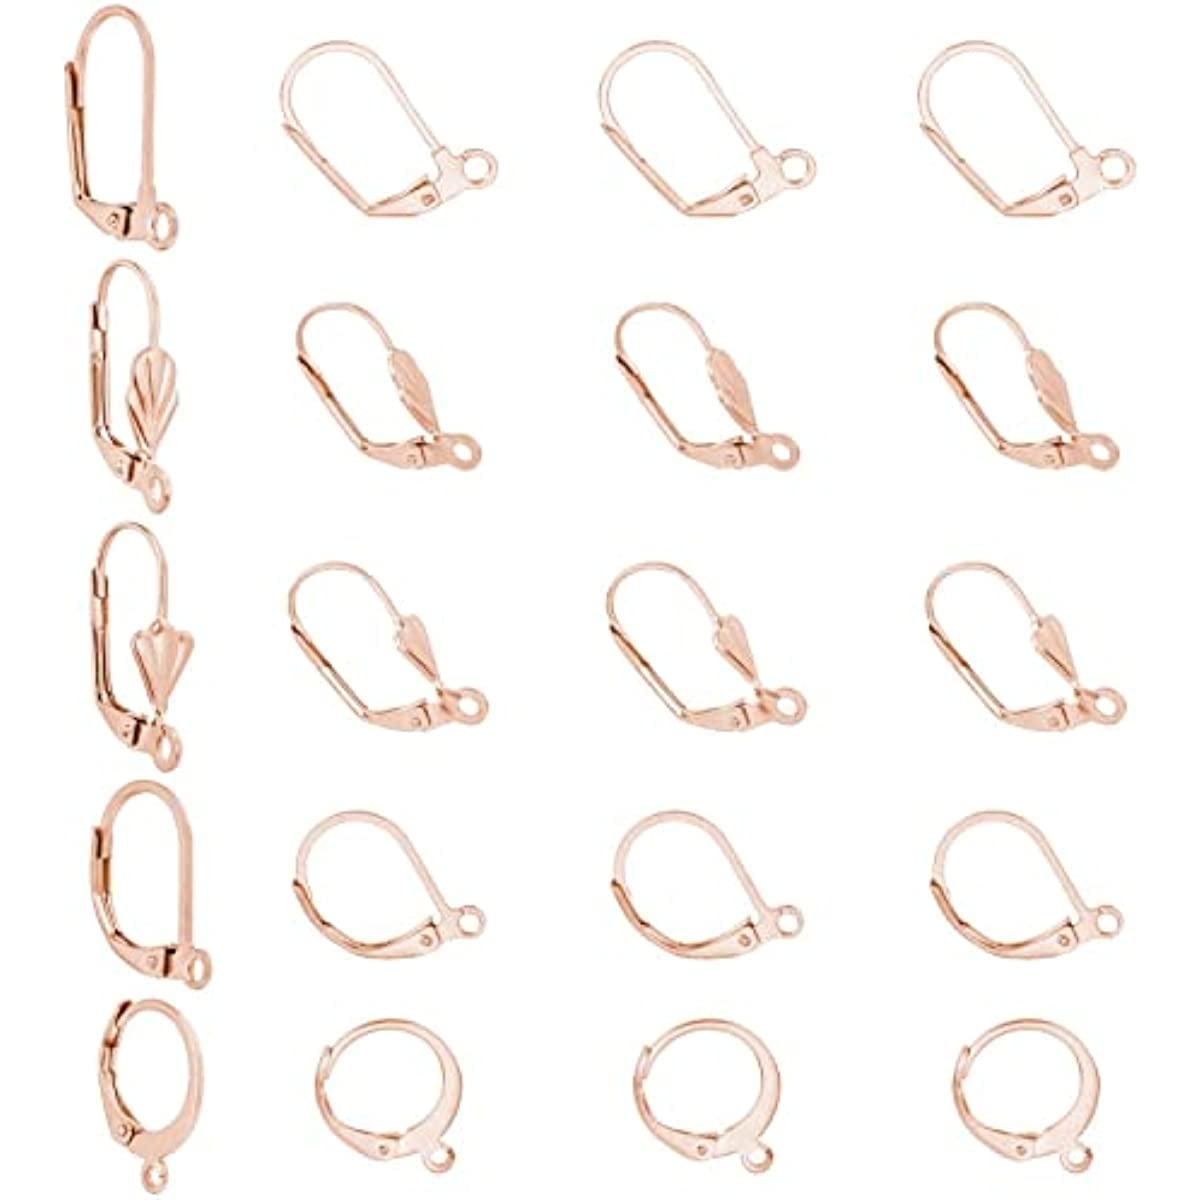 2 Colors Earring Making Kit 40pcs Stainless Steel Hoop Earring Findings  40pcs Open Jump Rings 40pcs Earring Hooks Beading Hoop Earring Supplies